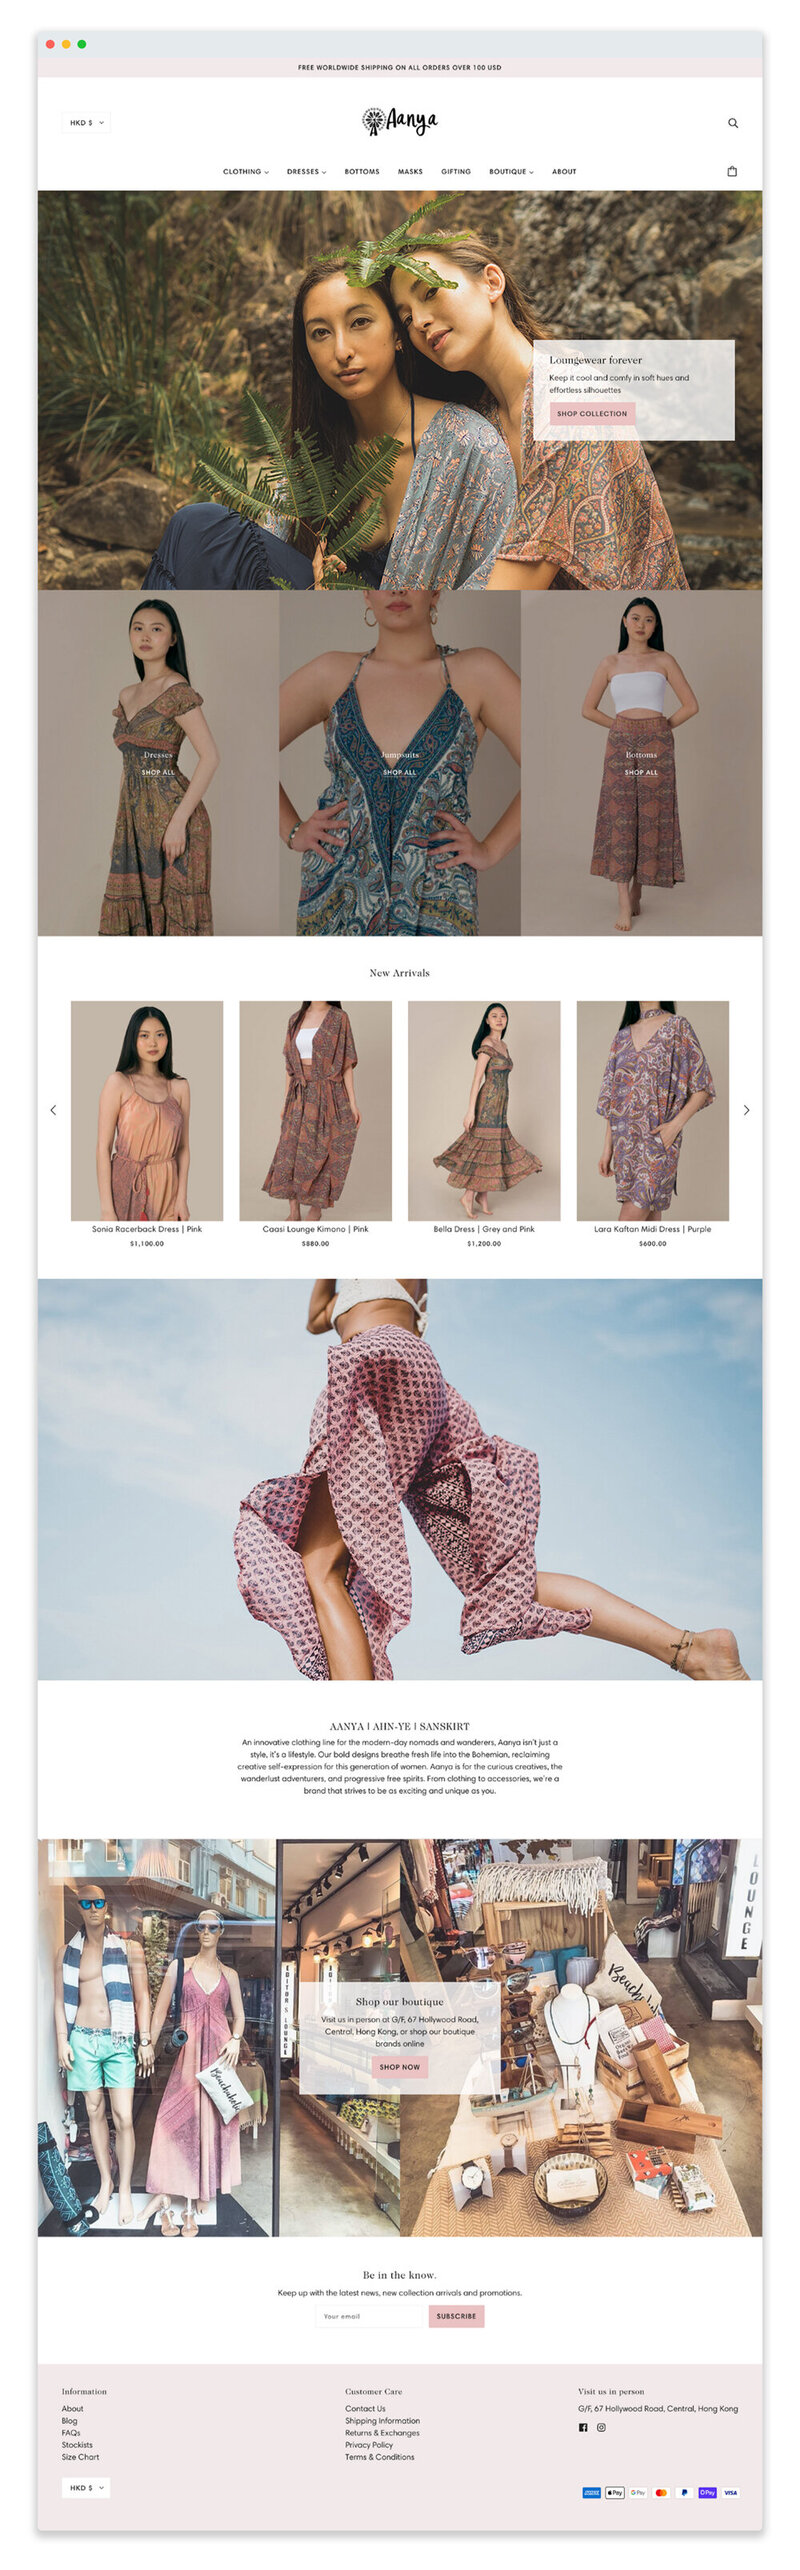 Hong Kong E-Commerce Website Design Service for Fashion and Clothing Brands - Web Designer Kyra Janelle’s Web Design for Aanya.